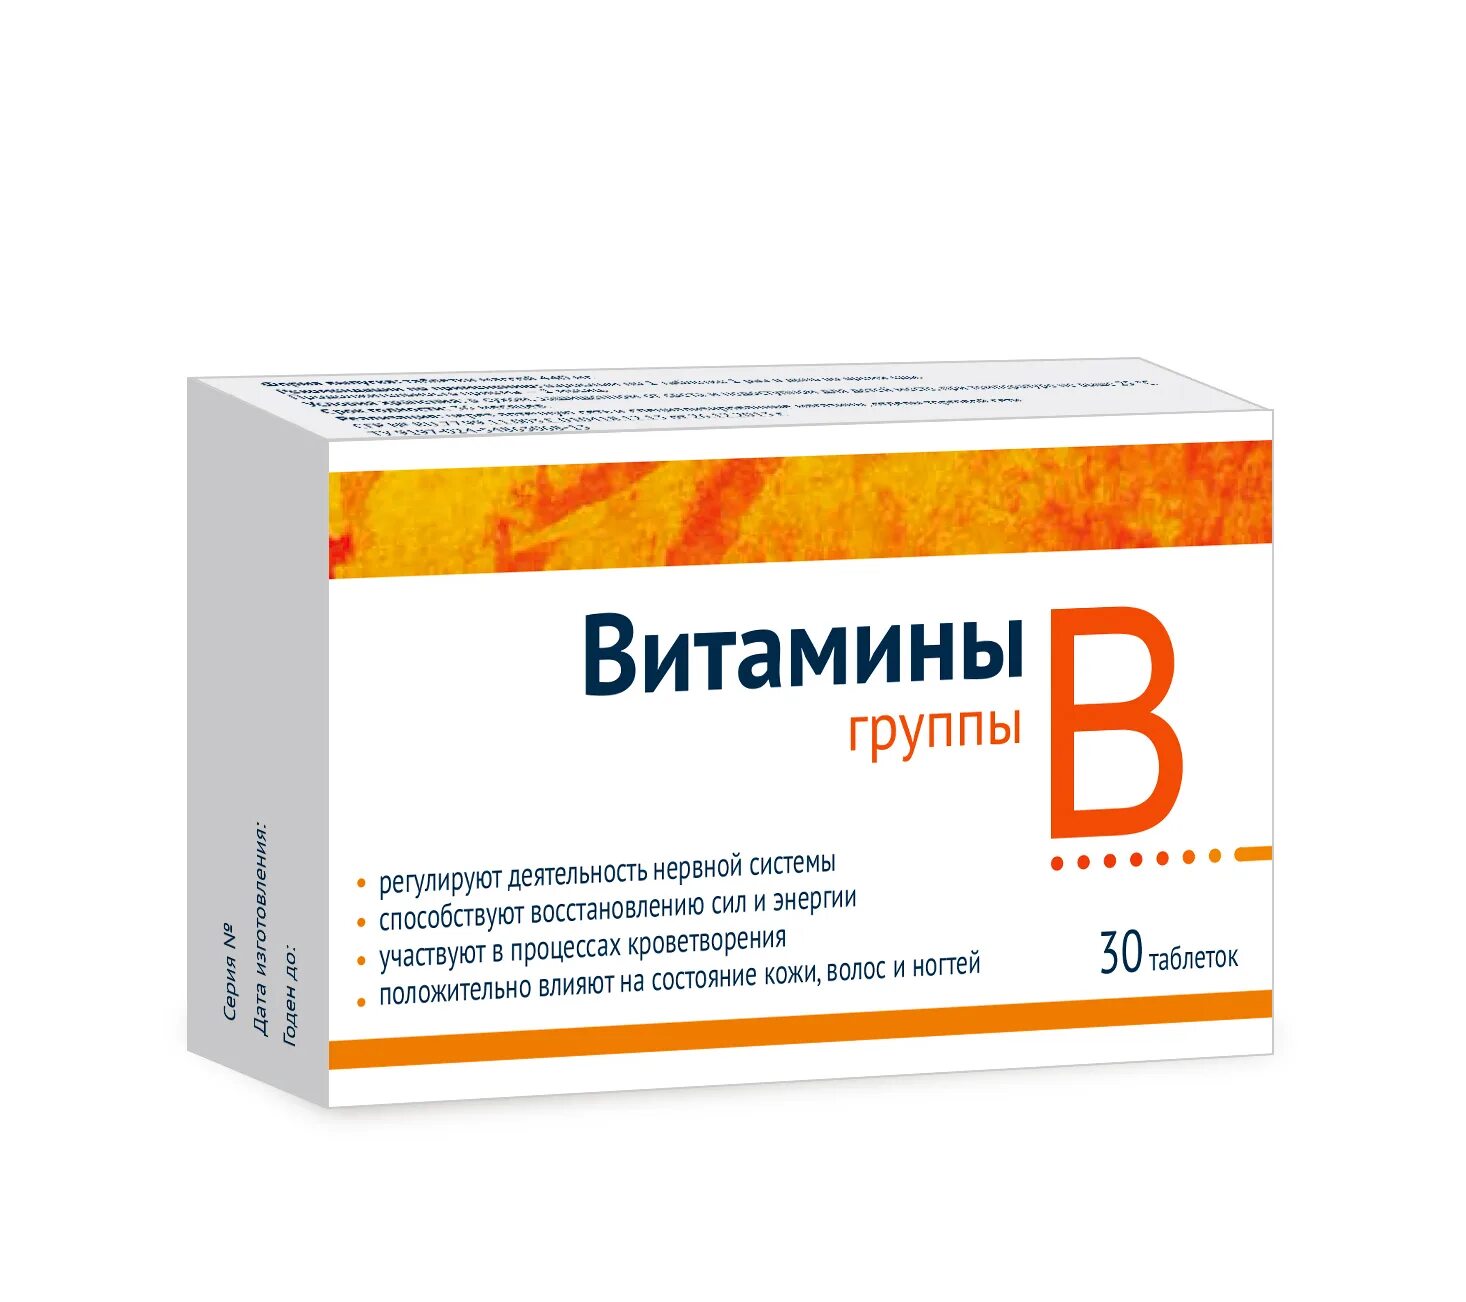 Препараты группы б 1. Витамины группы в табл x30. Комплекс витамины в 1 6 12 в таблетках. Комплекс витаминов в1 в6 в12 в таблетках название препаратов. Витамины б12 б6 в таблетках названия препаратов.